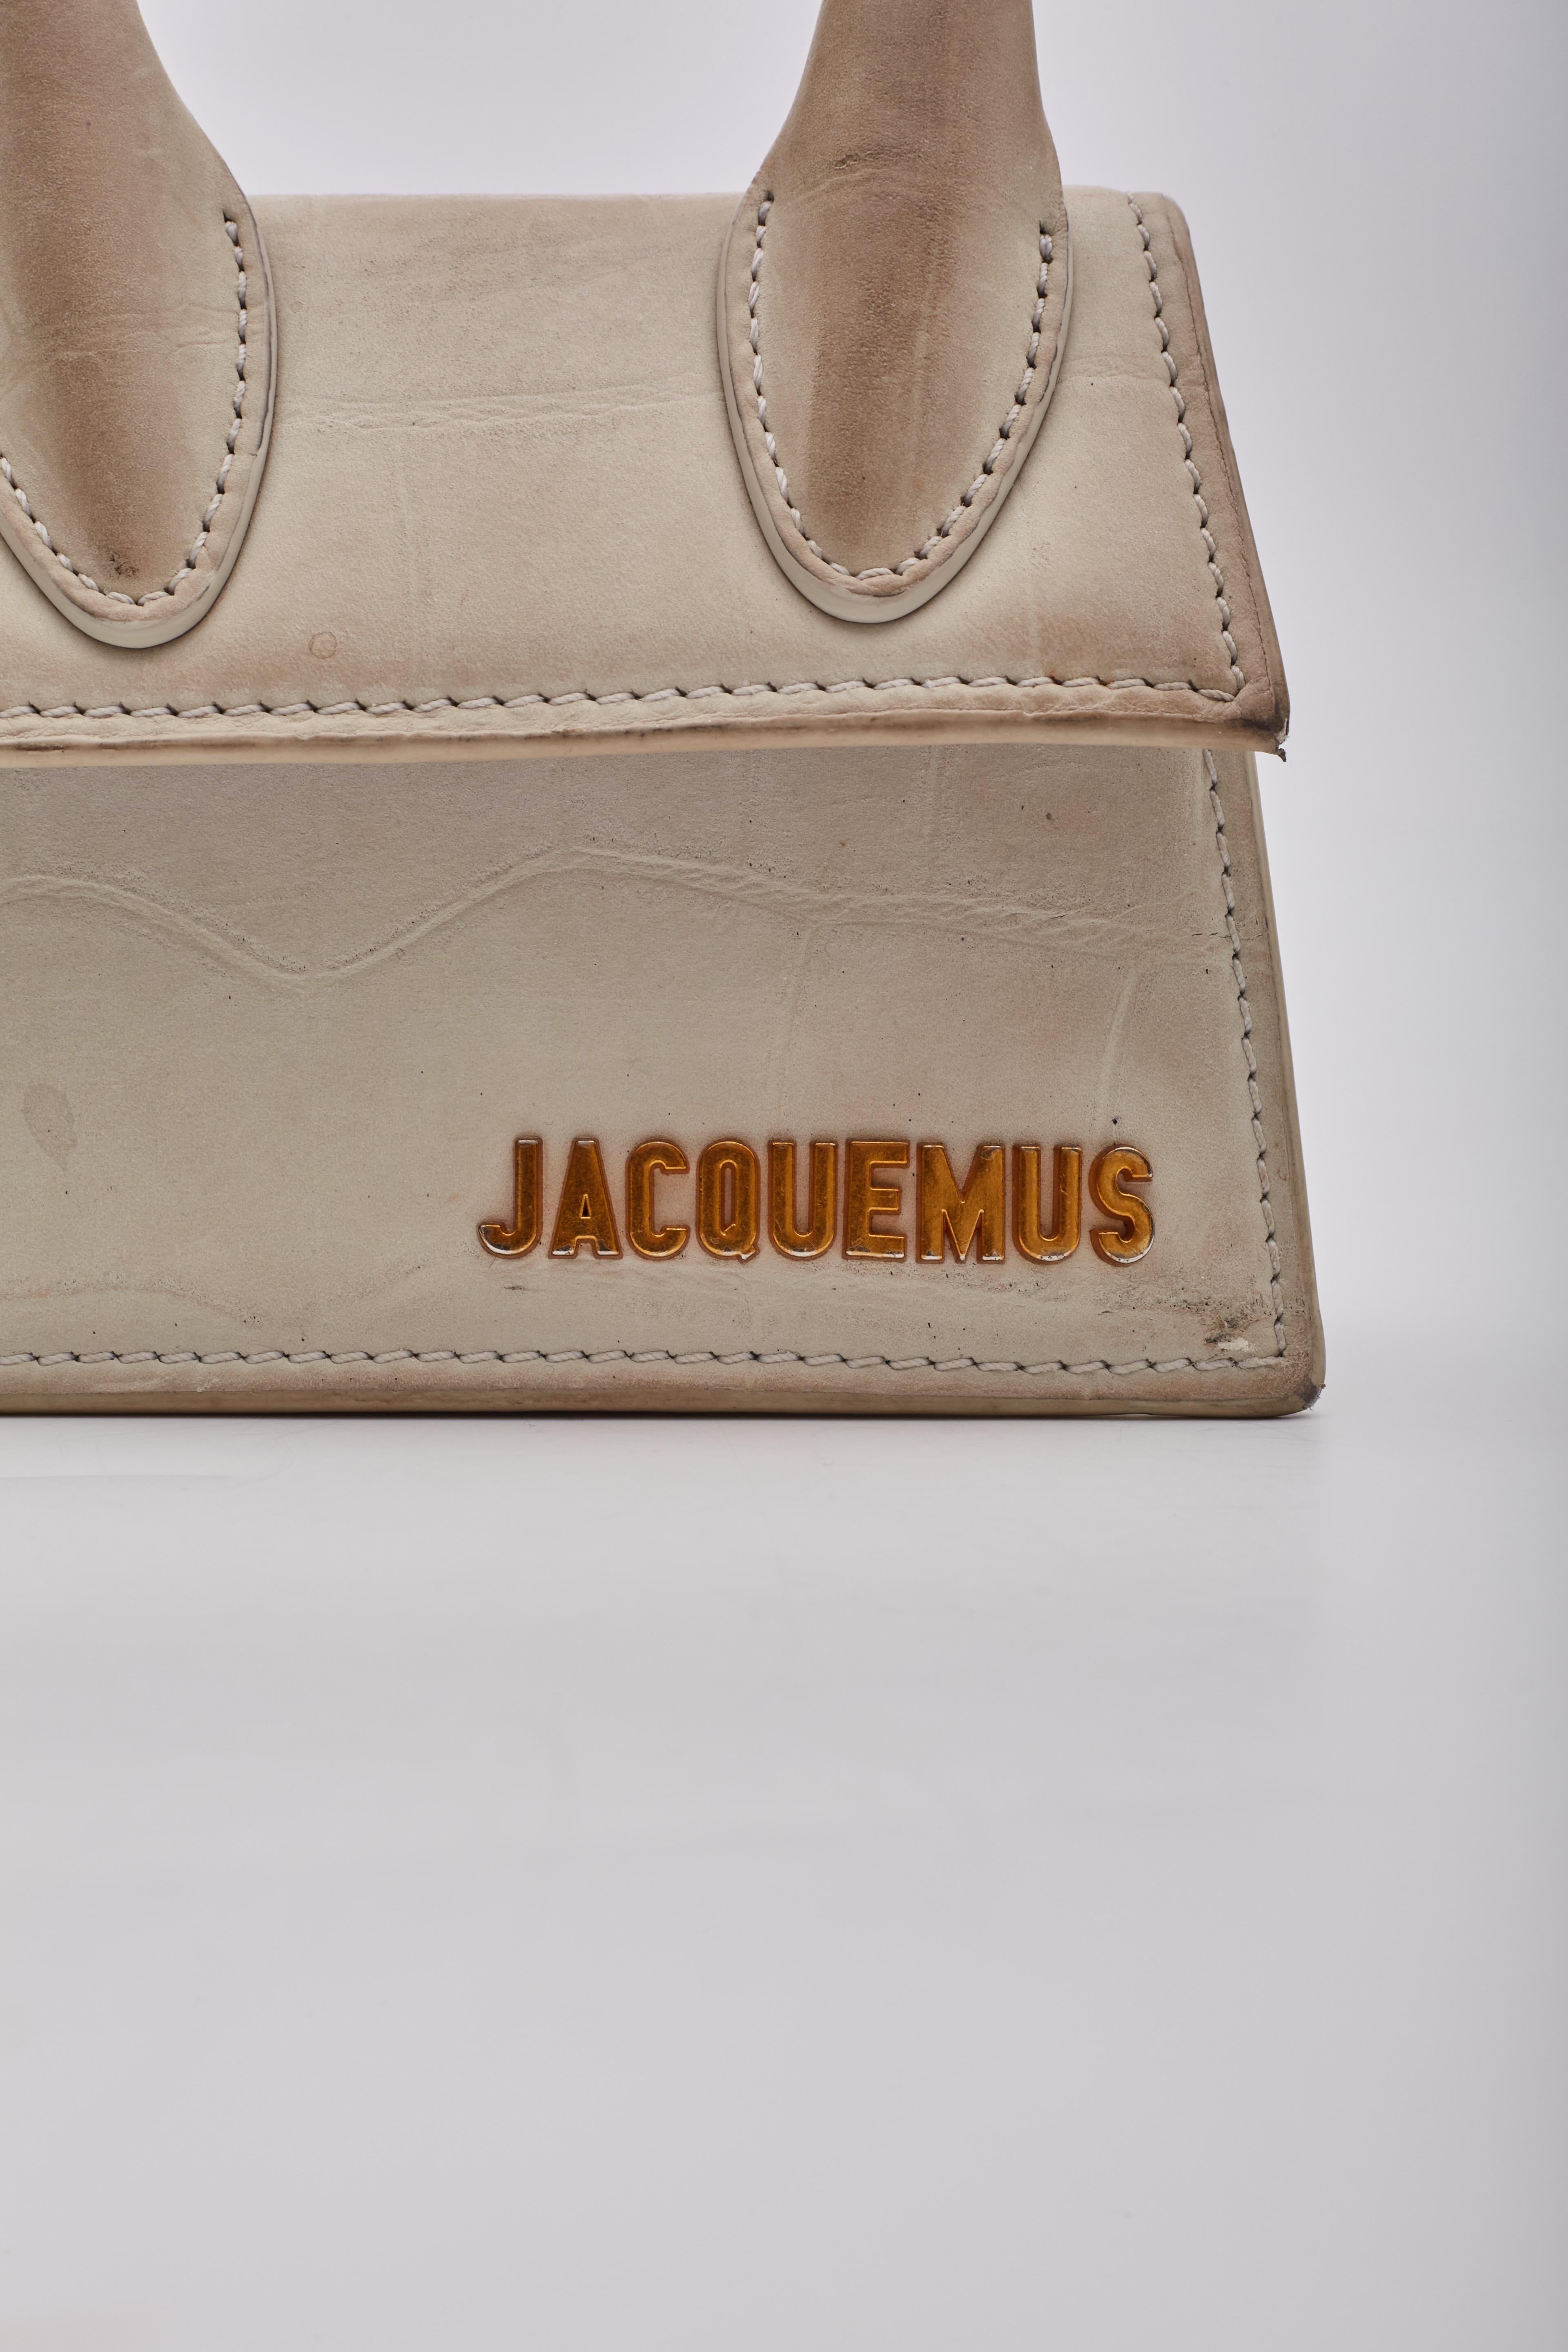 Jacquemus Off White Croc Mini Le Chiquito Clutch Bag 3